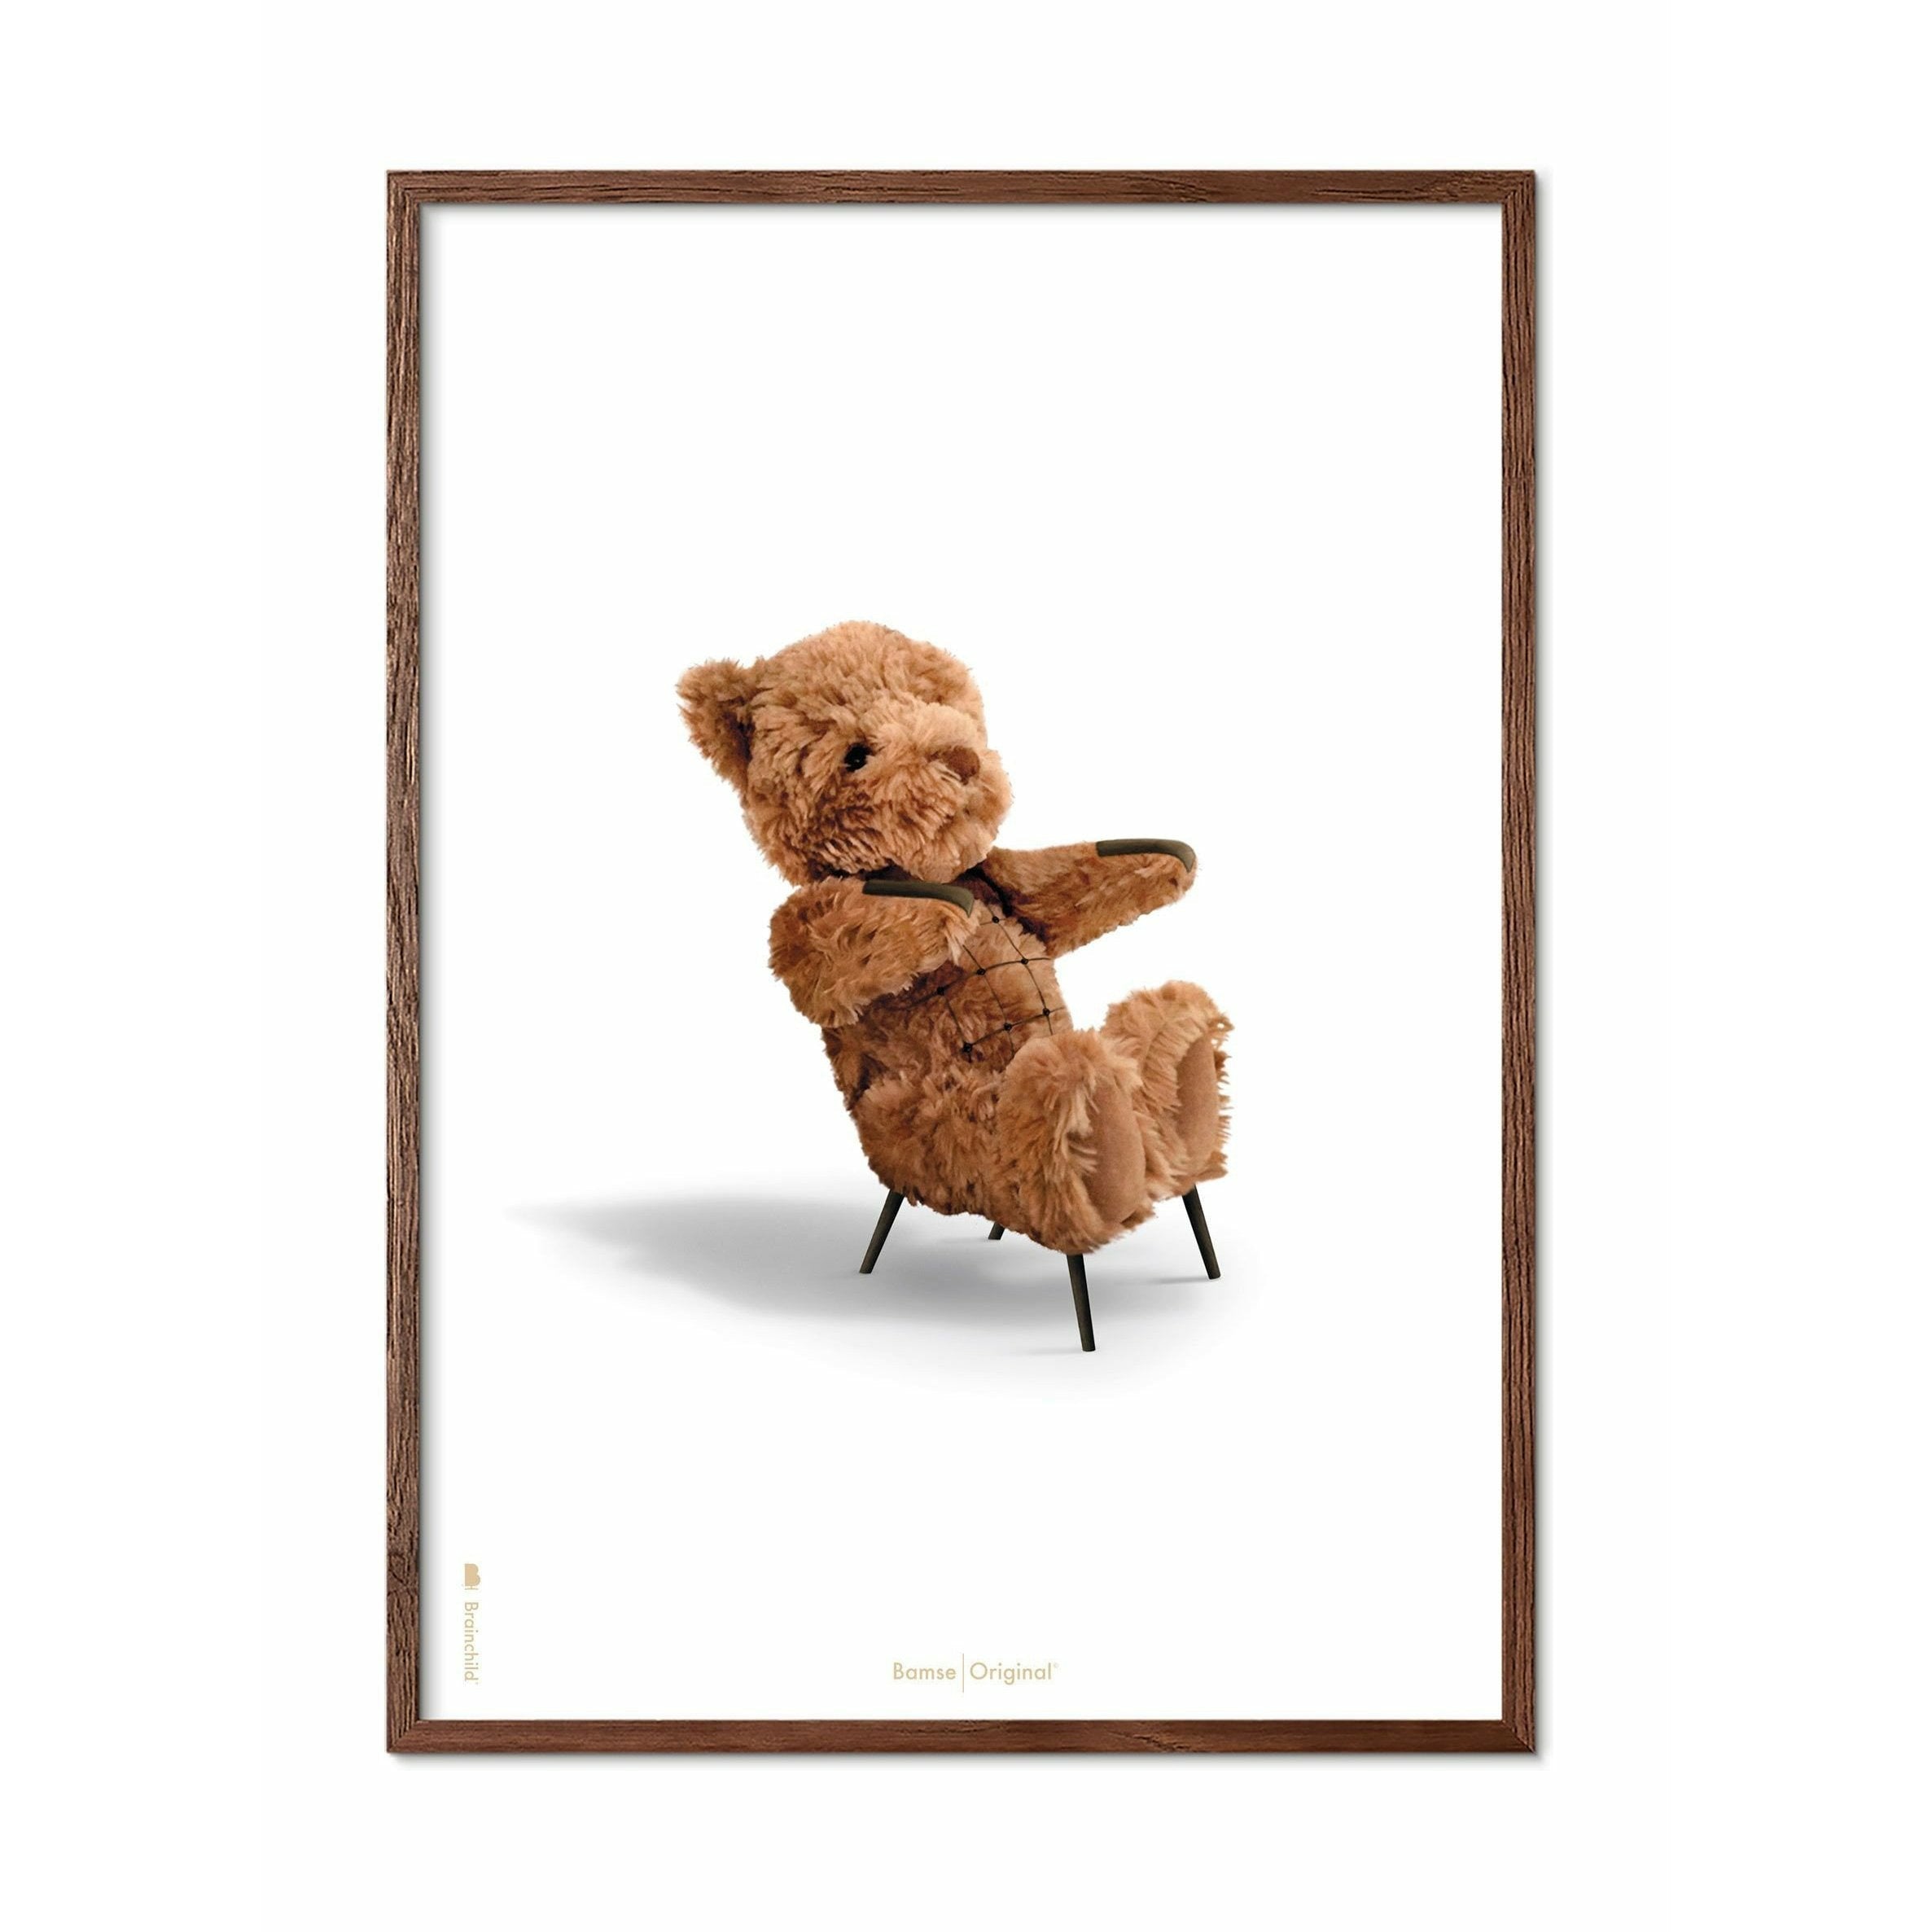 Brainchild Teddy Bear Classic Poster, Frame Made Of Dark Wood 70x100 Cm, White Background